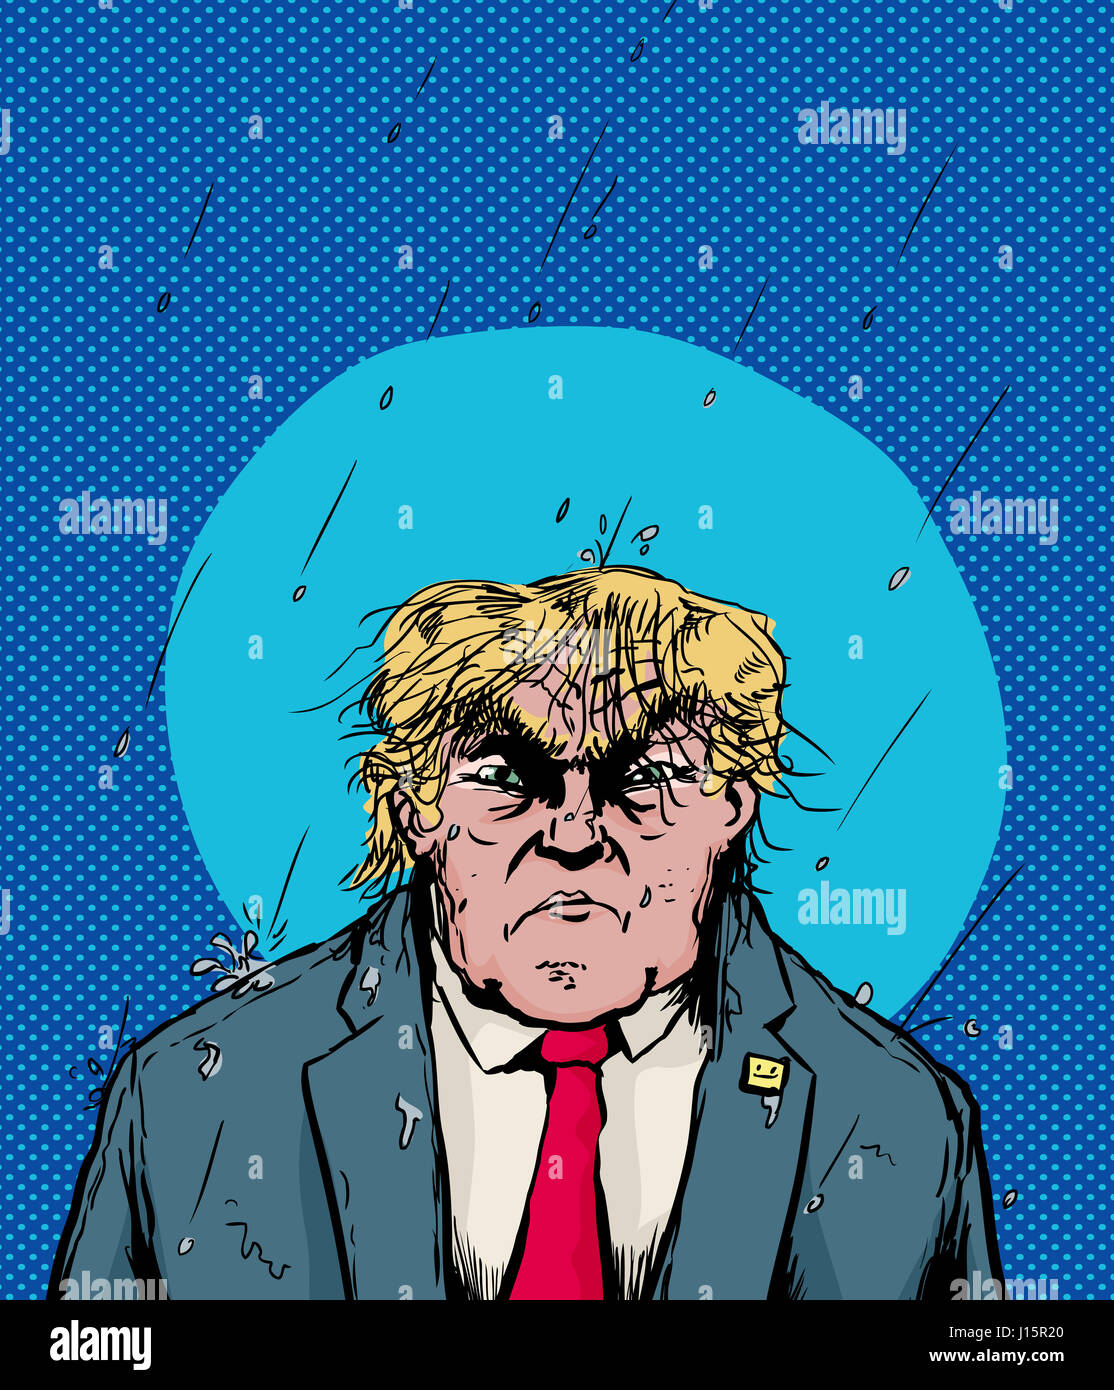 April 18, 2017. Caricature of soaking wet Donald Trump in rain storm Stock Photo